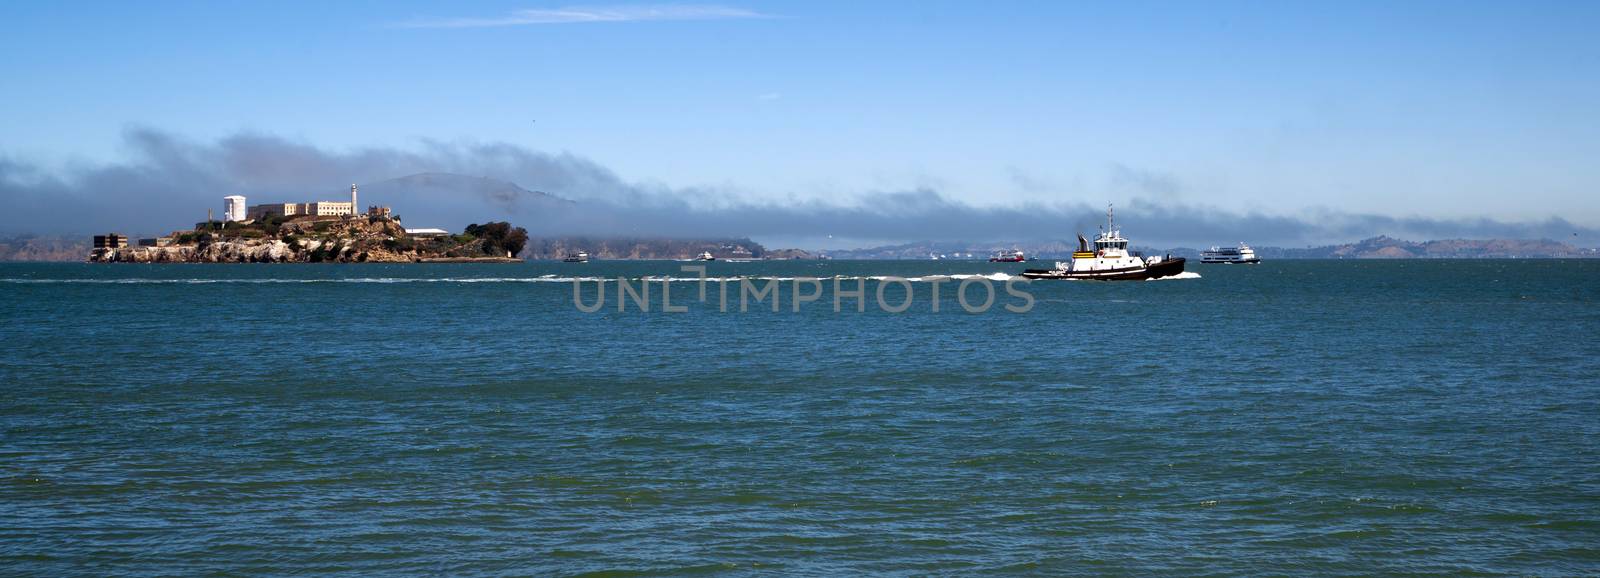 Boats Churn Bay Water Tug Boat Ferry Alcatraz Island San Francis by ChrisBoswell